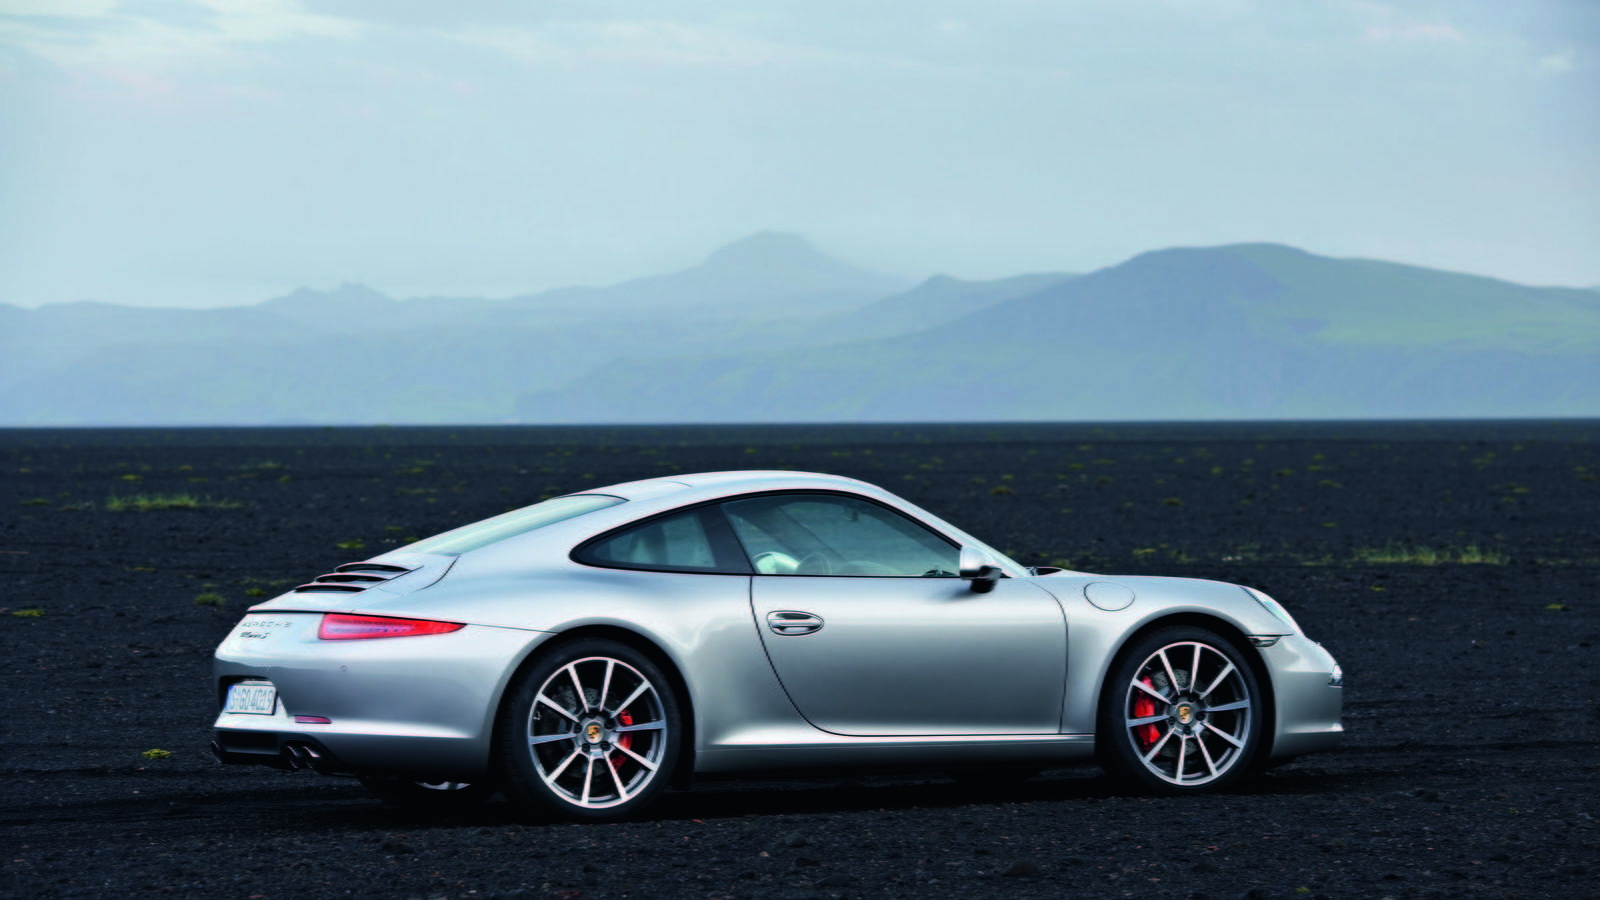 2012 Porsche 911 leaked images